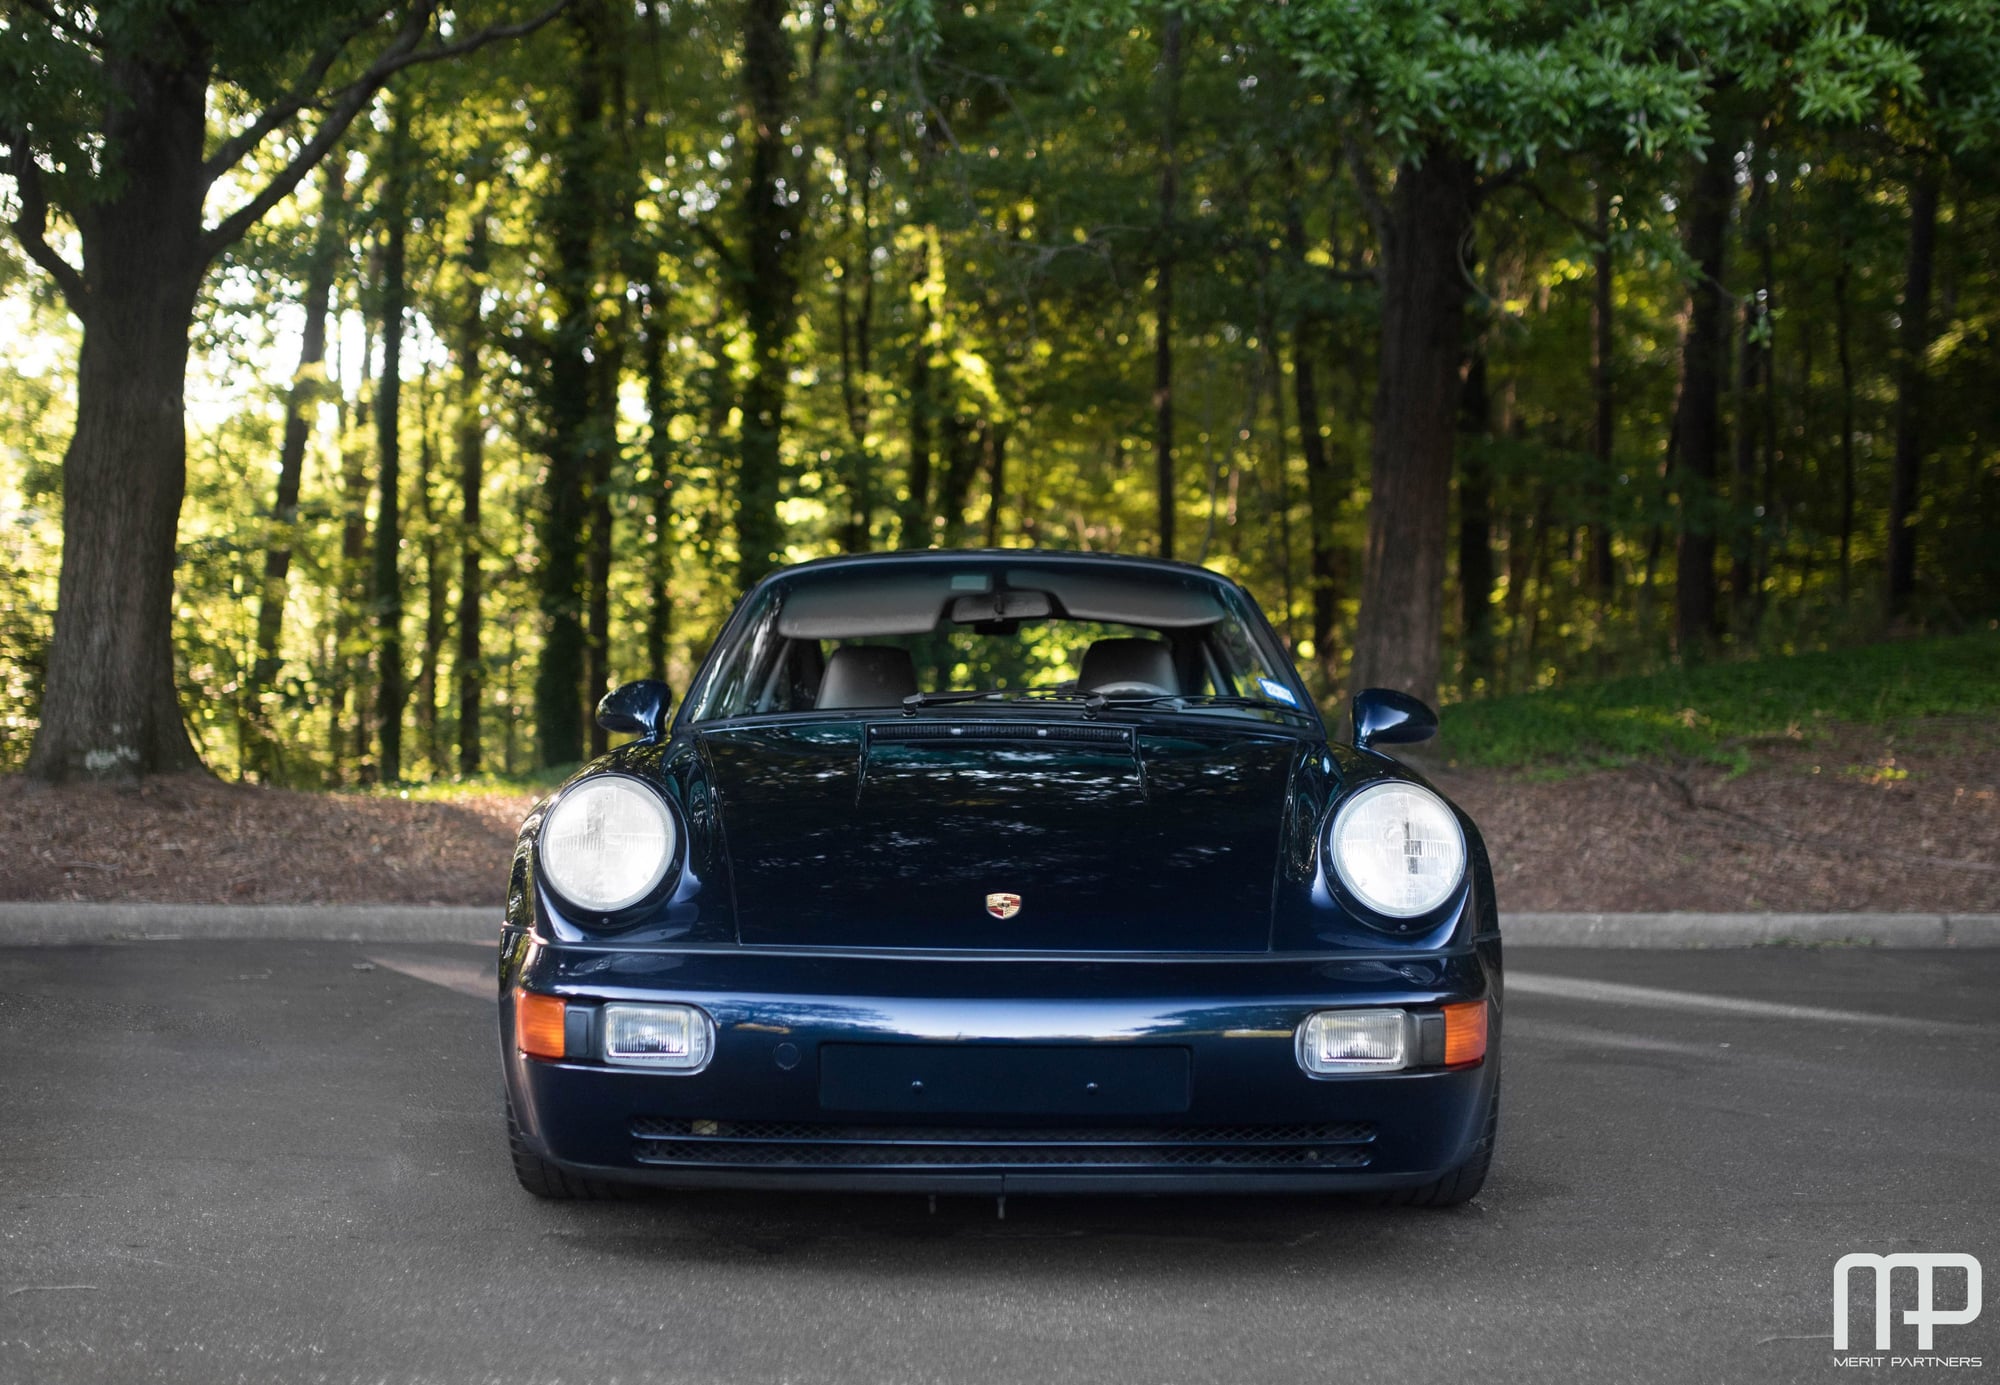 1994 Porsche 911 - 1994 Porsche 911 3.6 Turbo - Used - VIN WP0AC2966RS480285 - 36,600 Miles - 6 cyl - 2WD - Manual - Coupe - Blue - Atlanta, GA 30360, United States